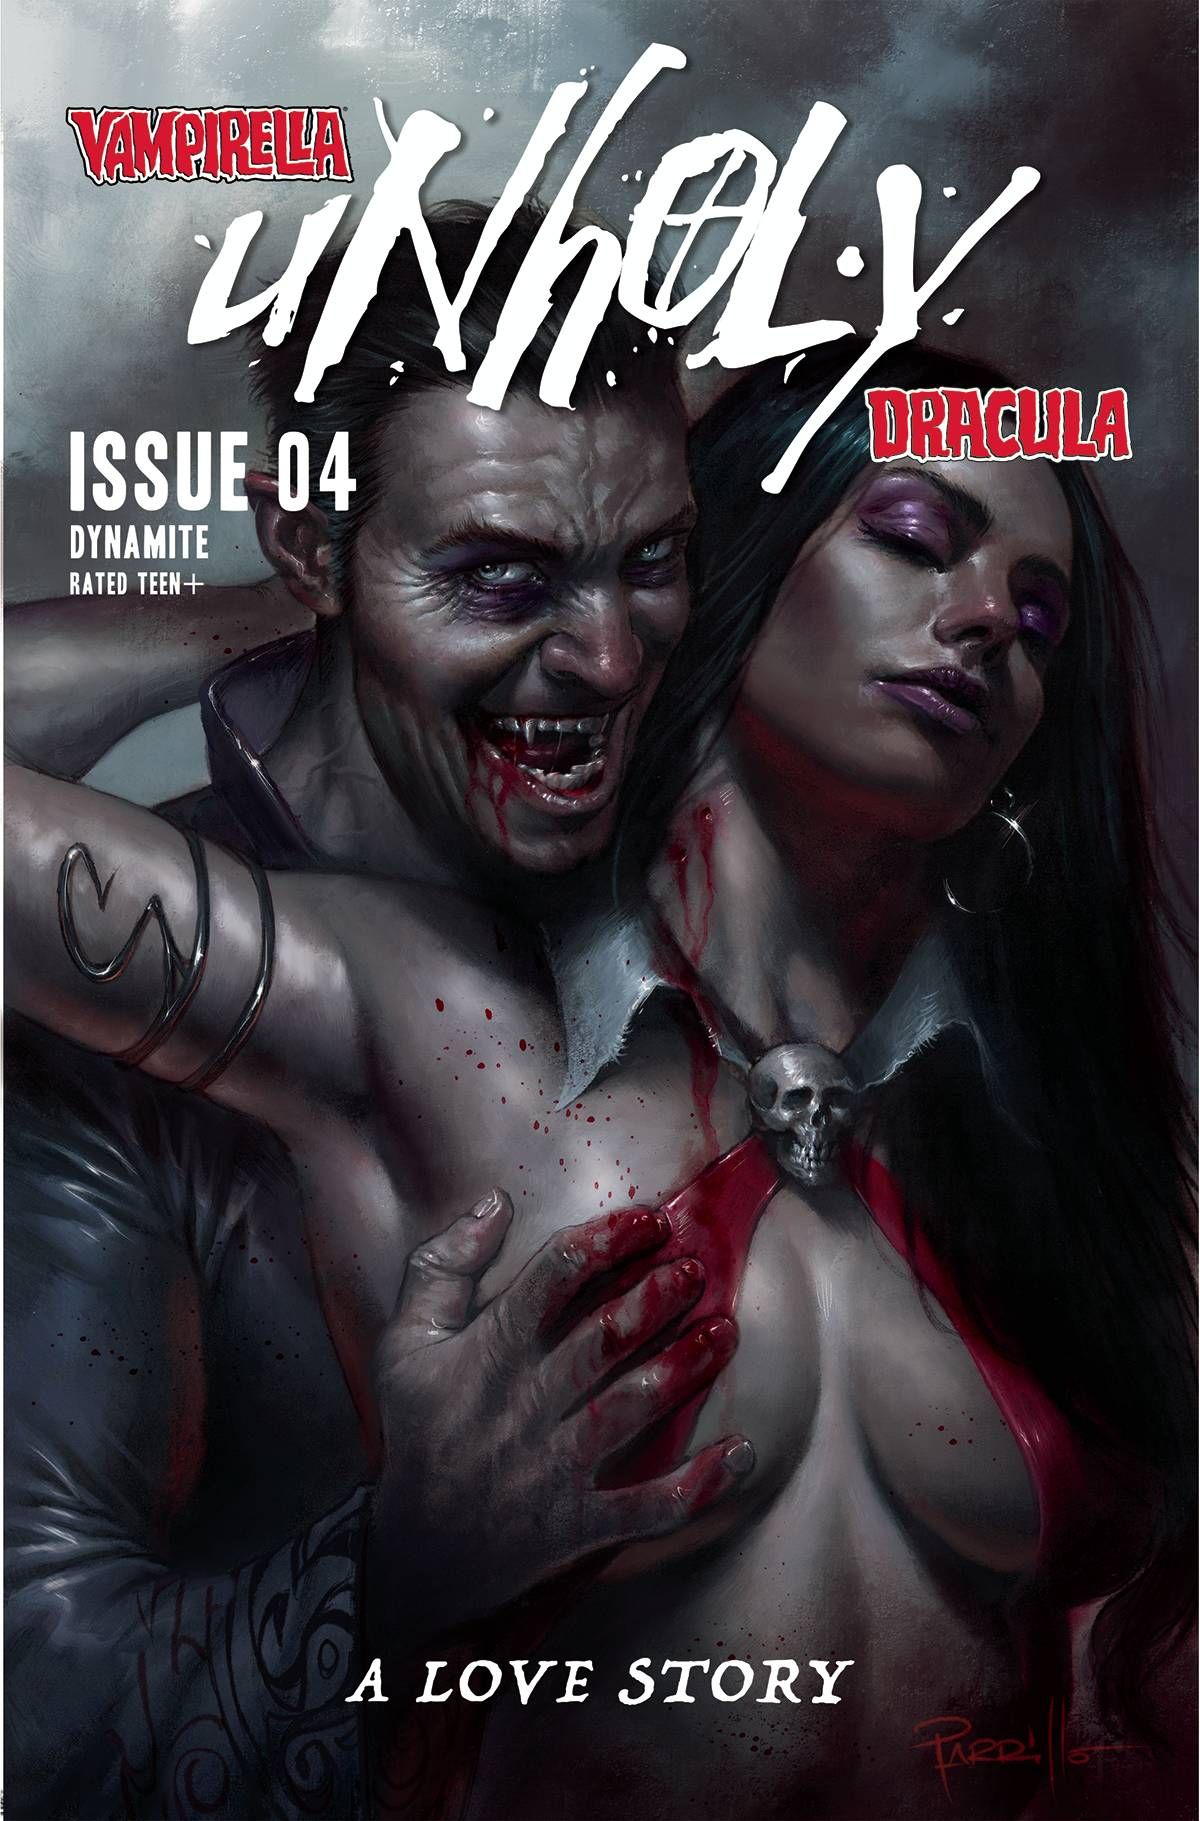 Vampirella / Dracula: Unholy #4 Comic